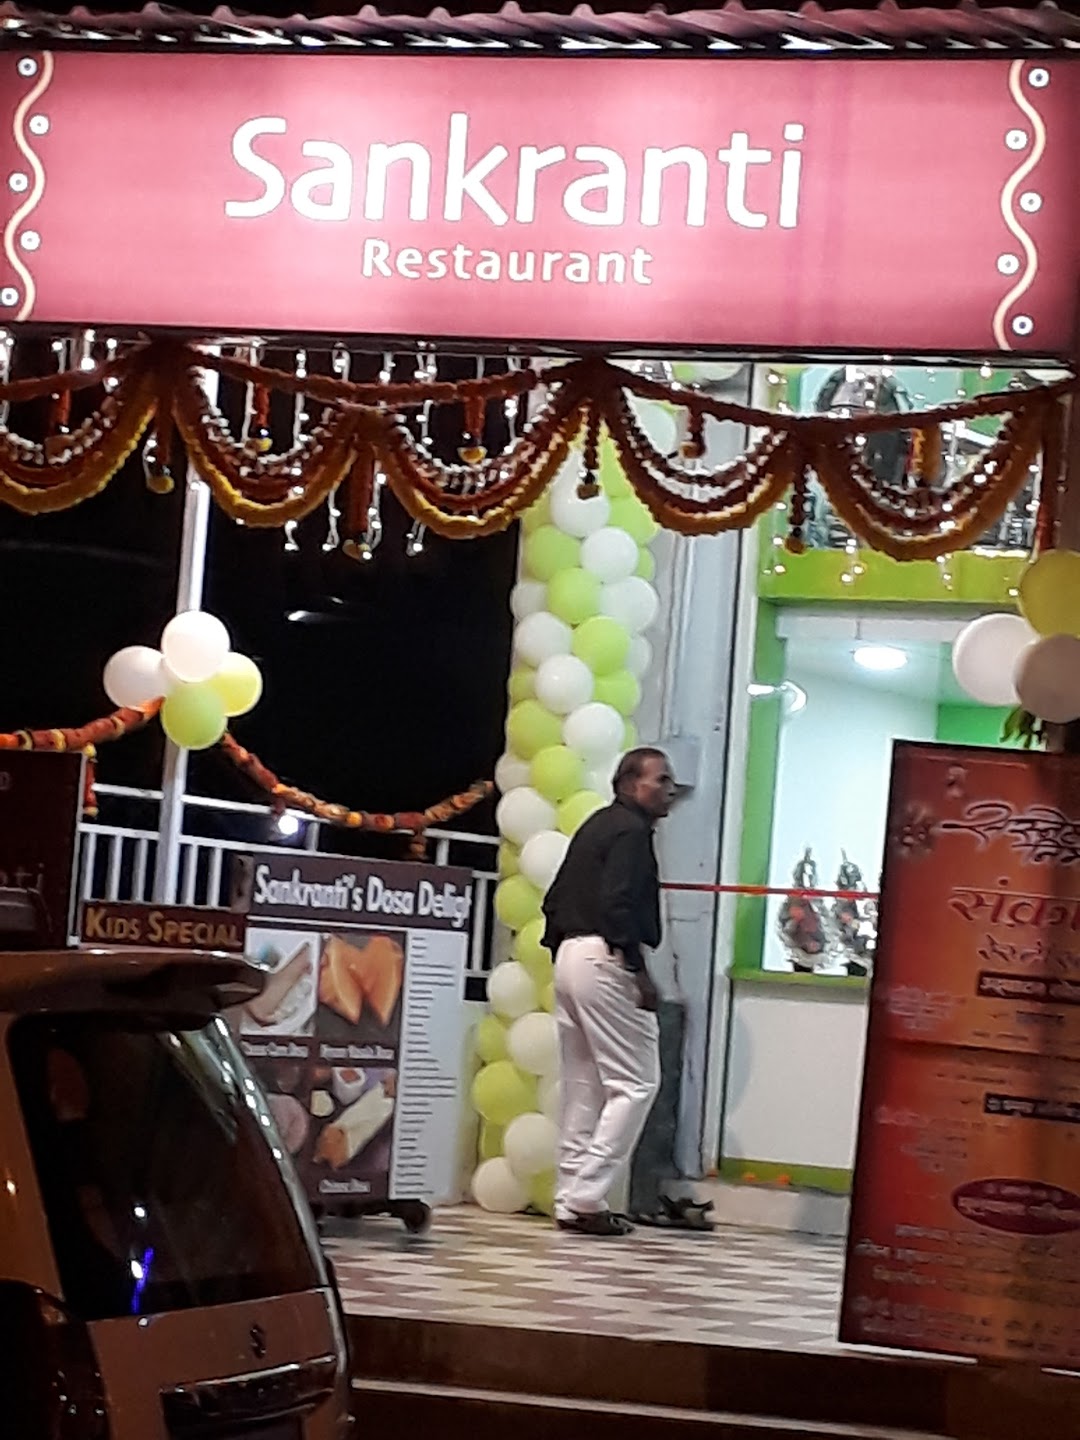 Sankranti Restaurant